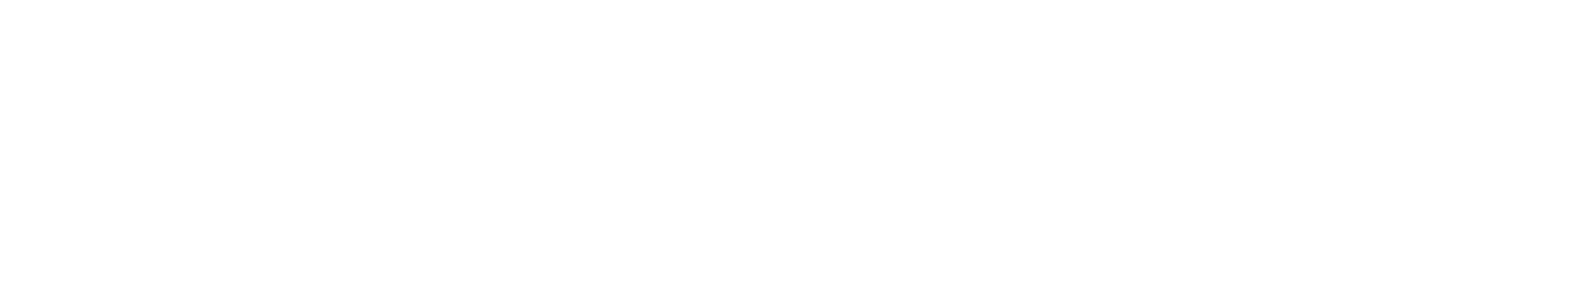 Vår Energi logo grand pour les fonds sombres (PNG transparent)